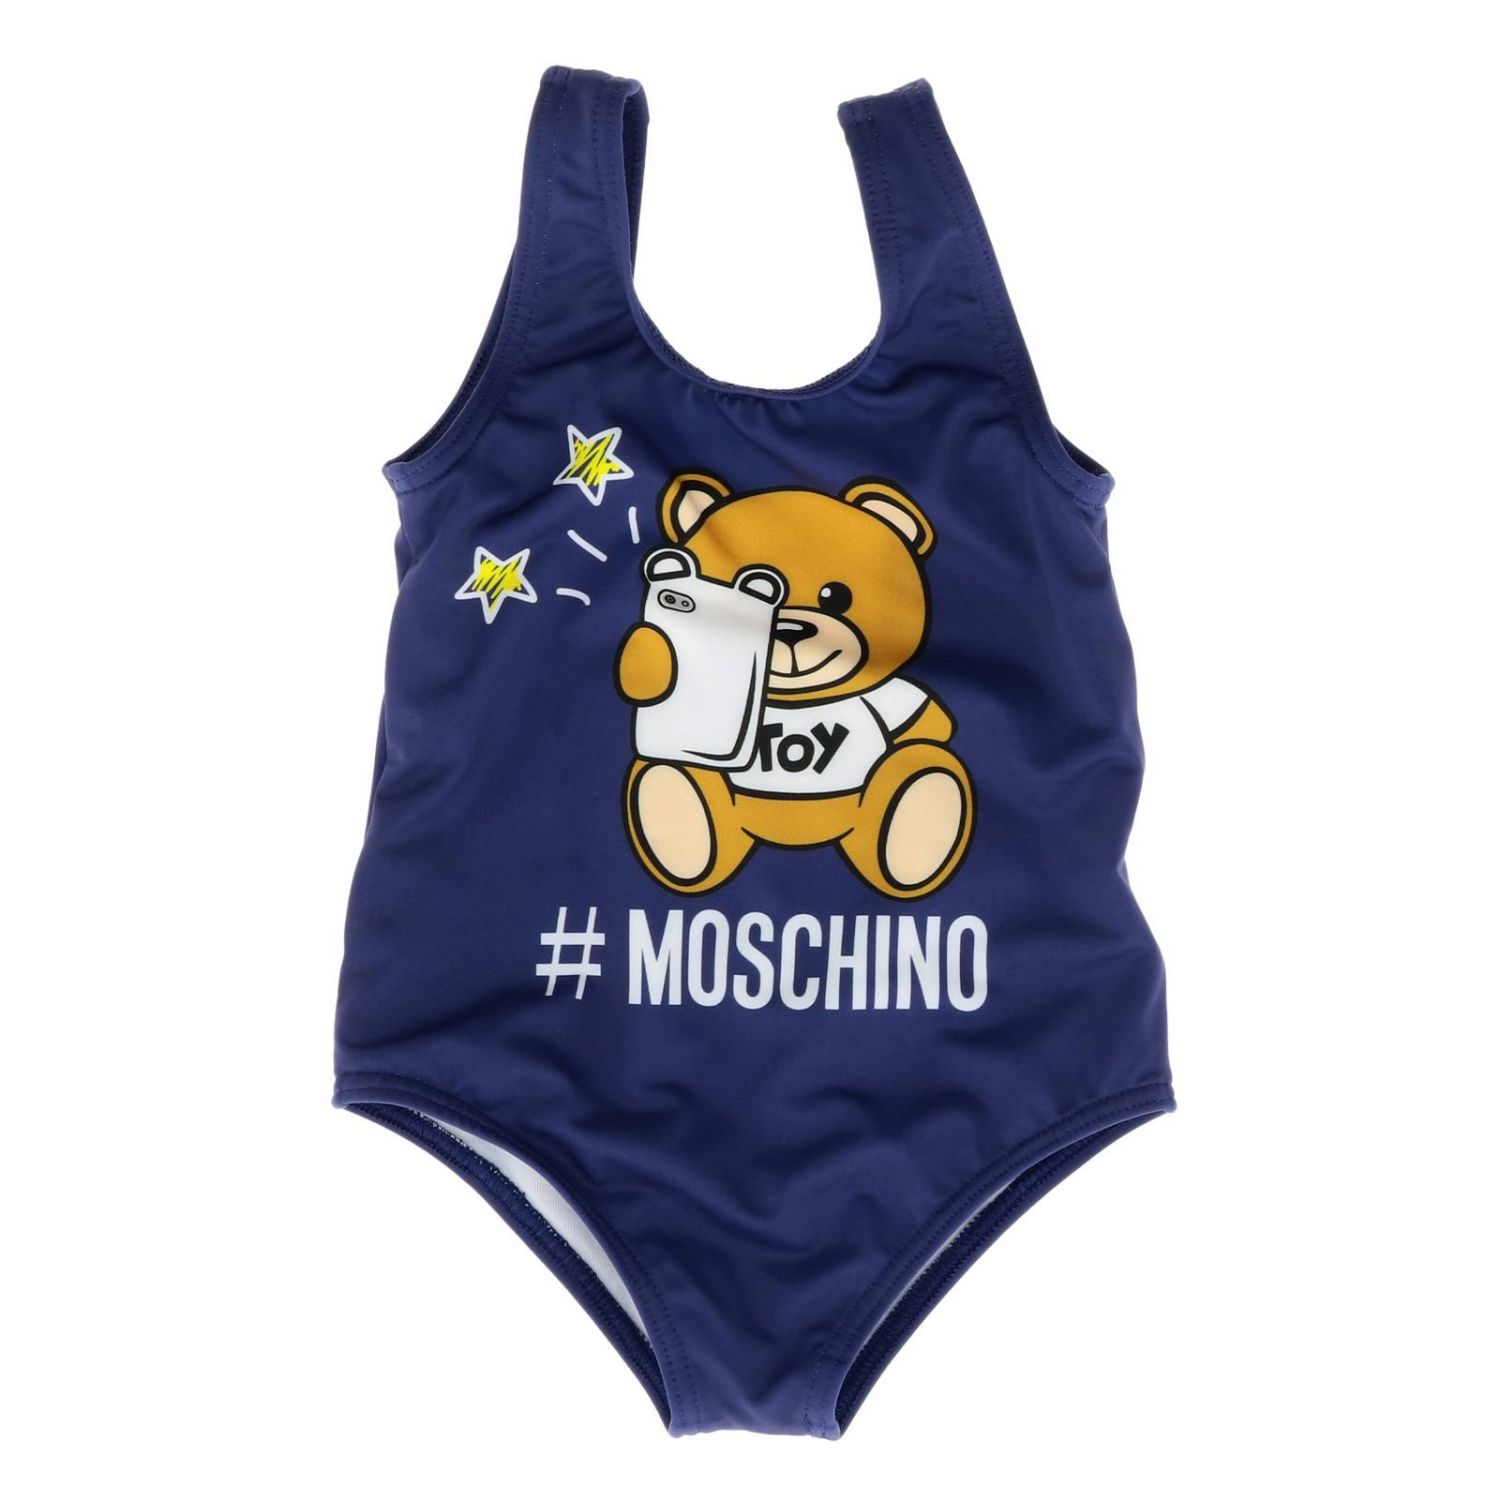 moschino baby bathing suit